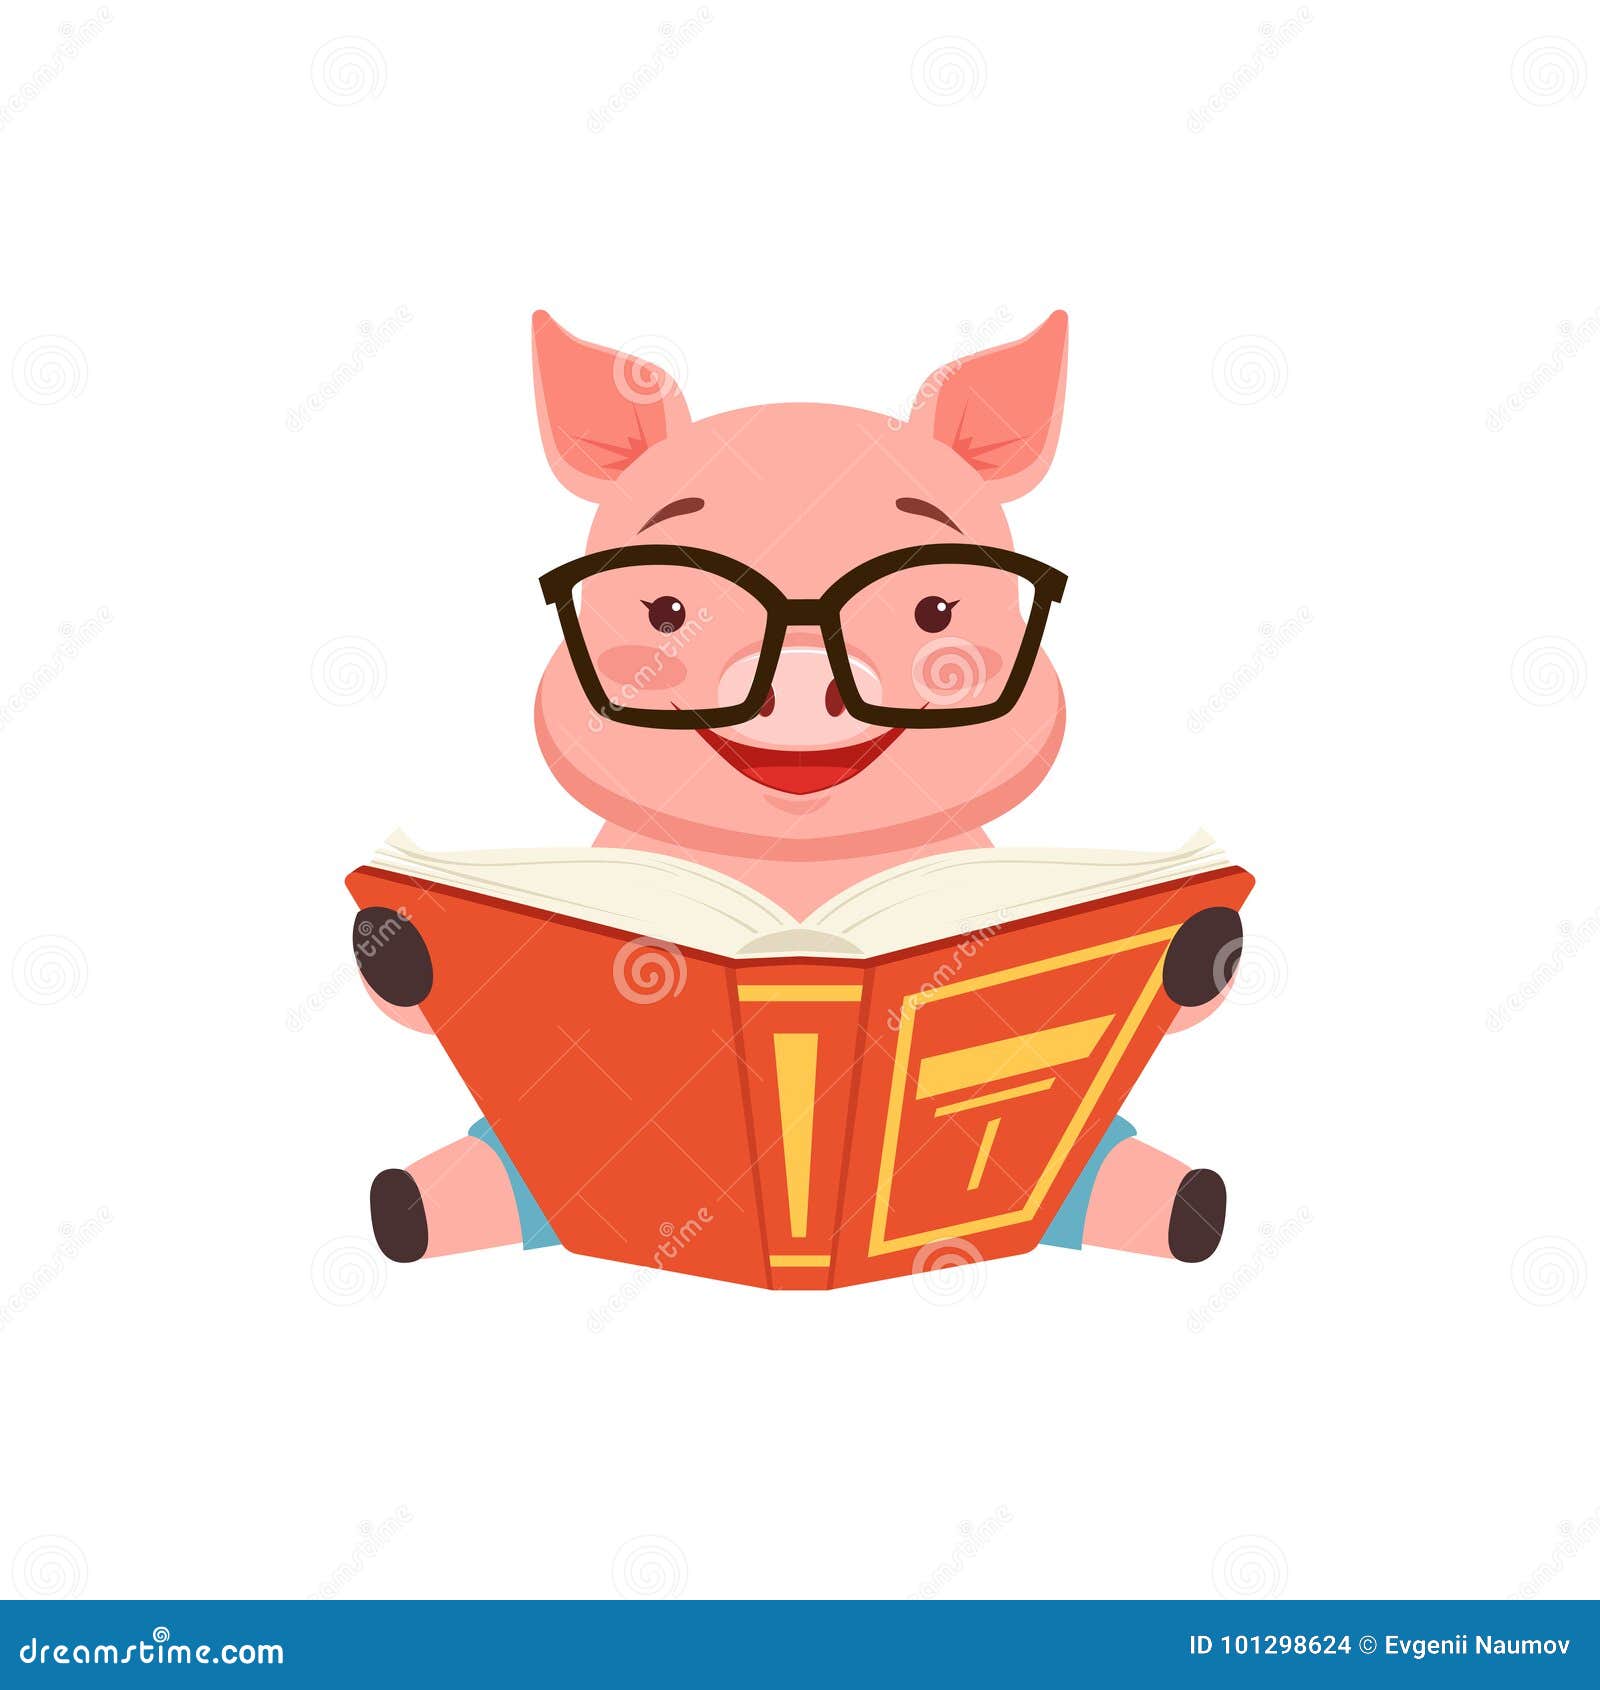 Cute Smart Pig Sitting on the Floor Anf Reading Book, Funny Cartoon Animal  Vector Illustration Stock Vector - Illustration of funny, happy: 101298624